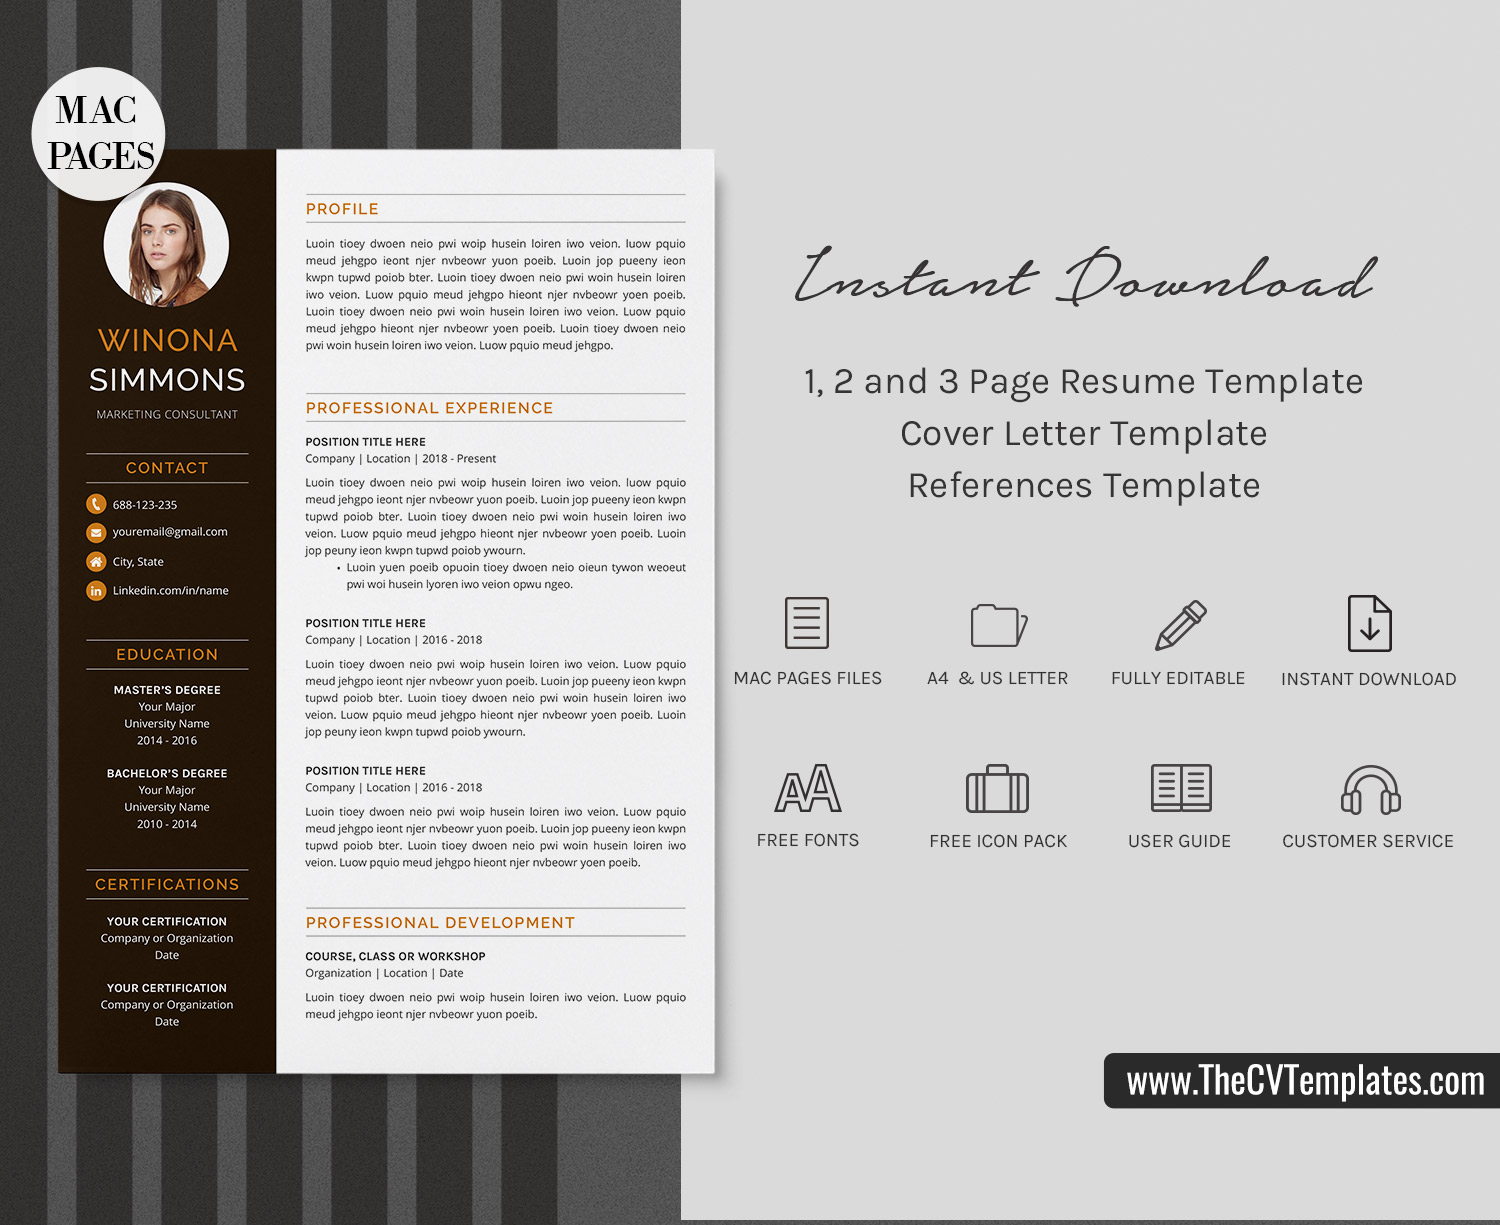 For Mac Pages Professional Cv Template Resume Template For Job Curriculum Vitae Modern Resume Creative Resume Editable Resume Format Teacher Resume 1 2 3 Page Resume Instant Download Thecvtemplates Com